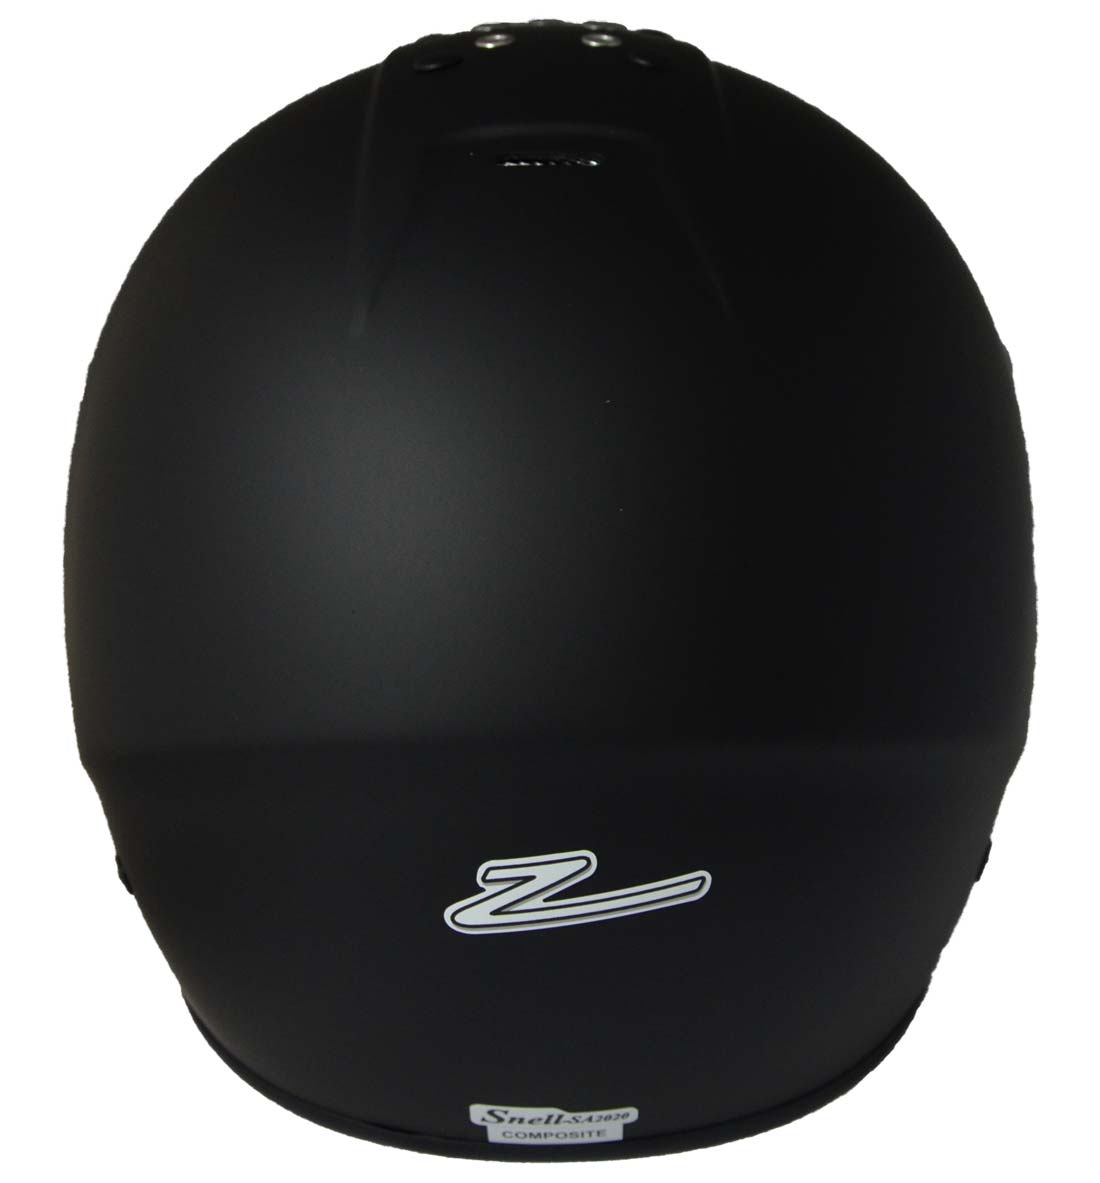 Zamp RZ 59 Helmet SA2020 -  Matte Black